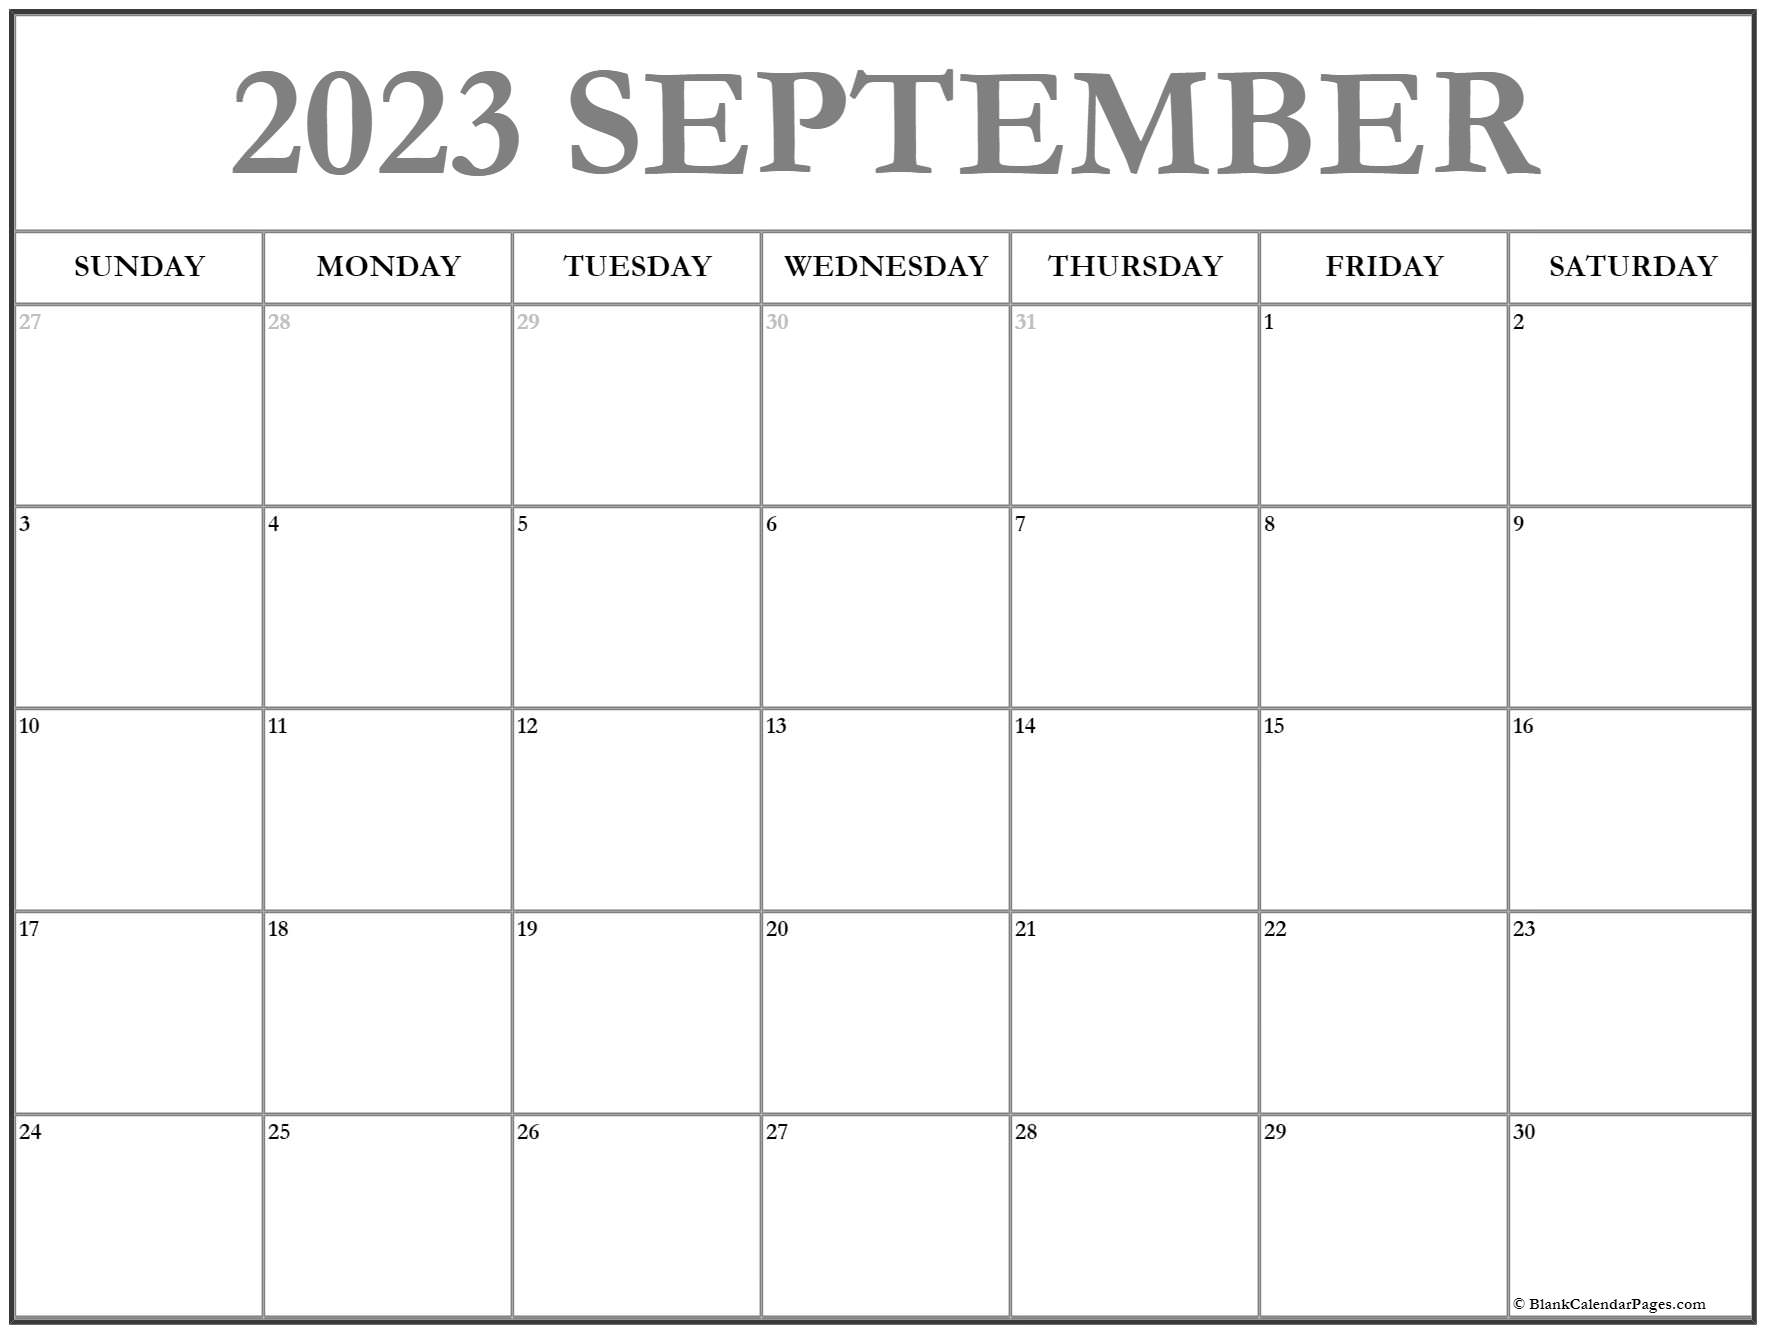 September 2023 Calendar Of The Month Free Printable September Calendar 